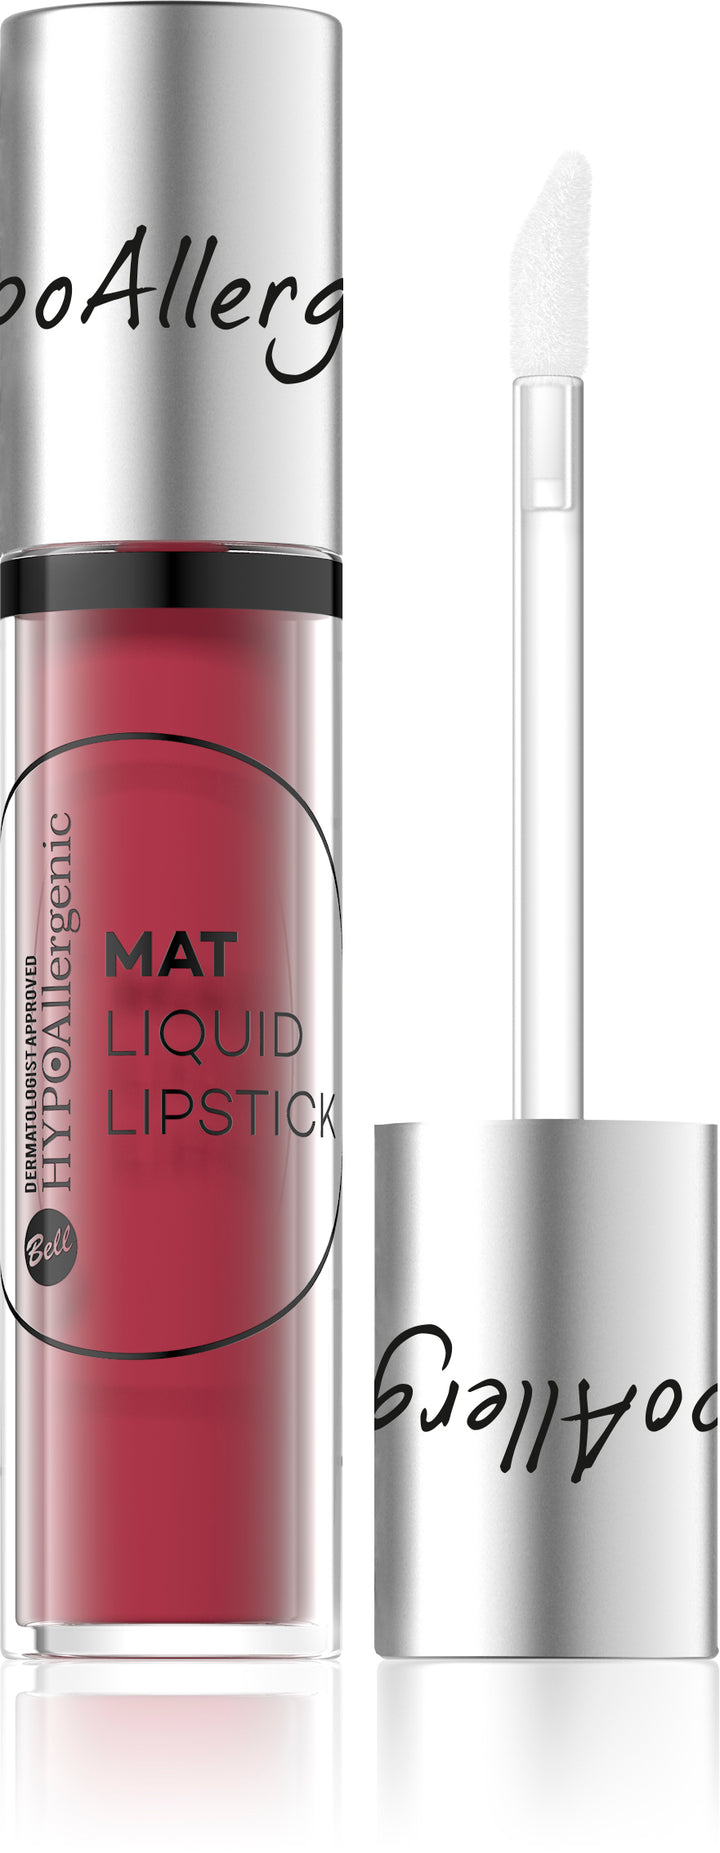 

Hypoallergenic Mat Liquid Lipstick is an extra long-lasting liquid matte lipstick.